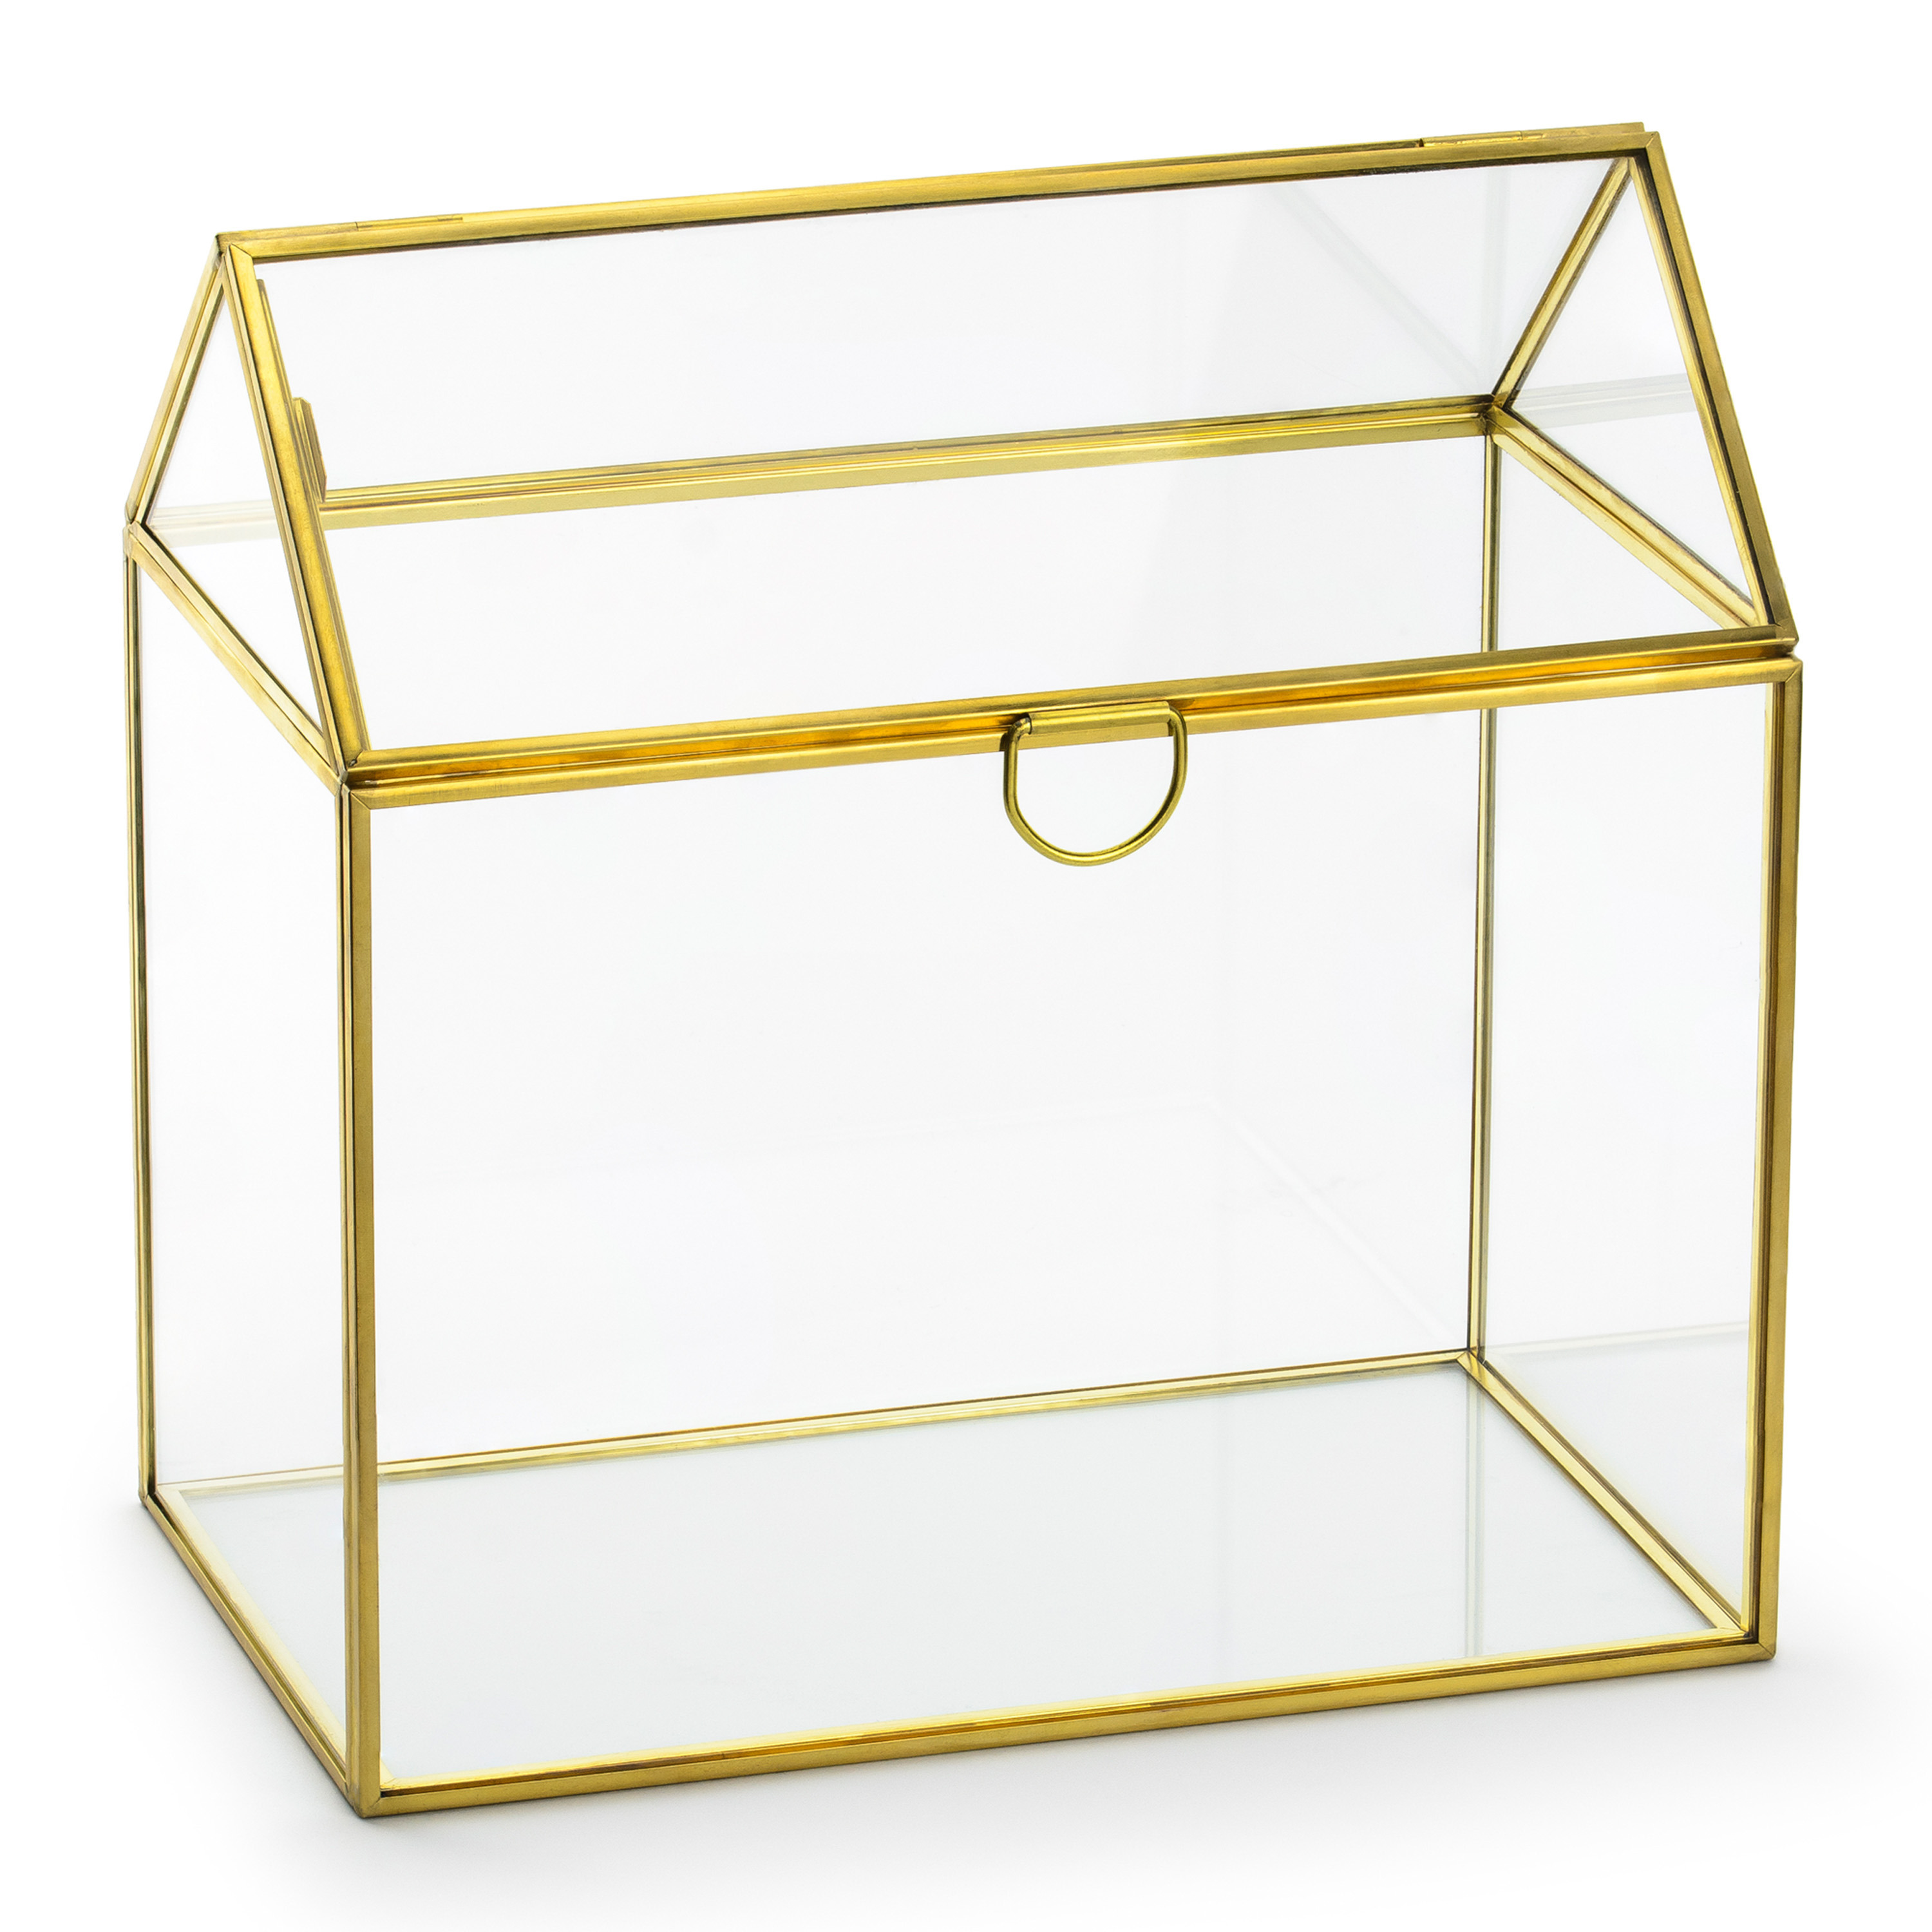 Sieradendoos opbergkistje goud huisje glas-metaal 13 x 21 cm